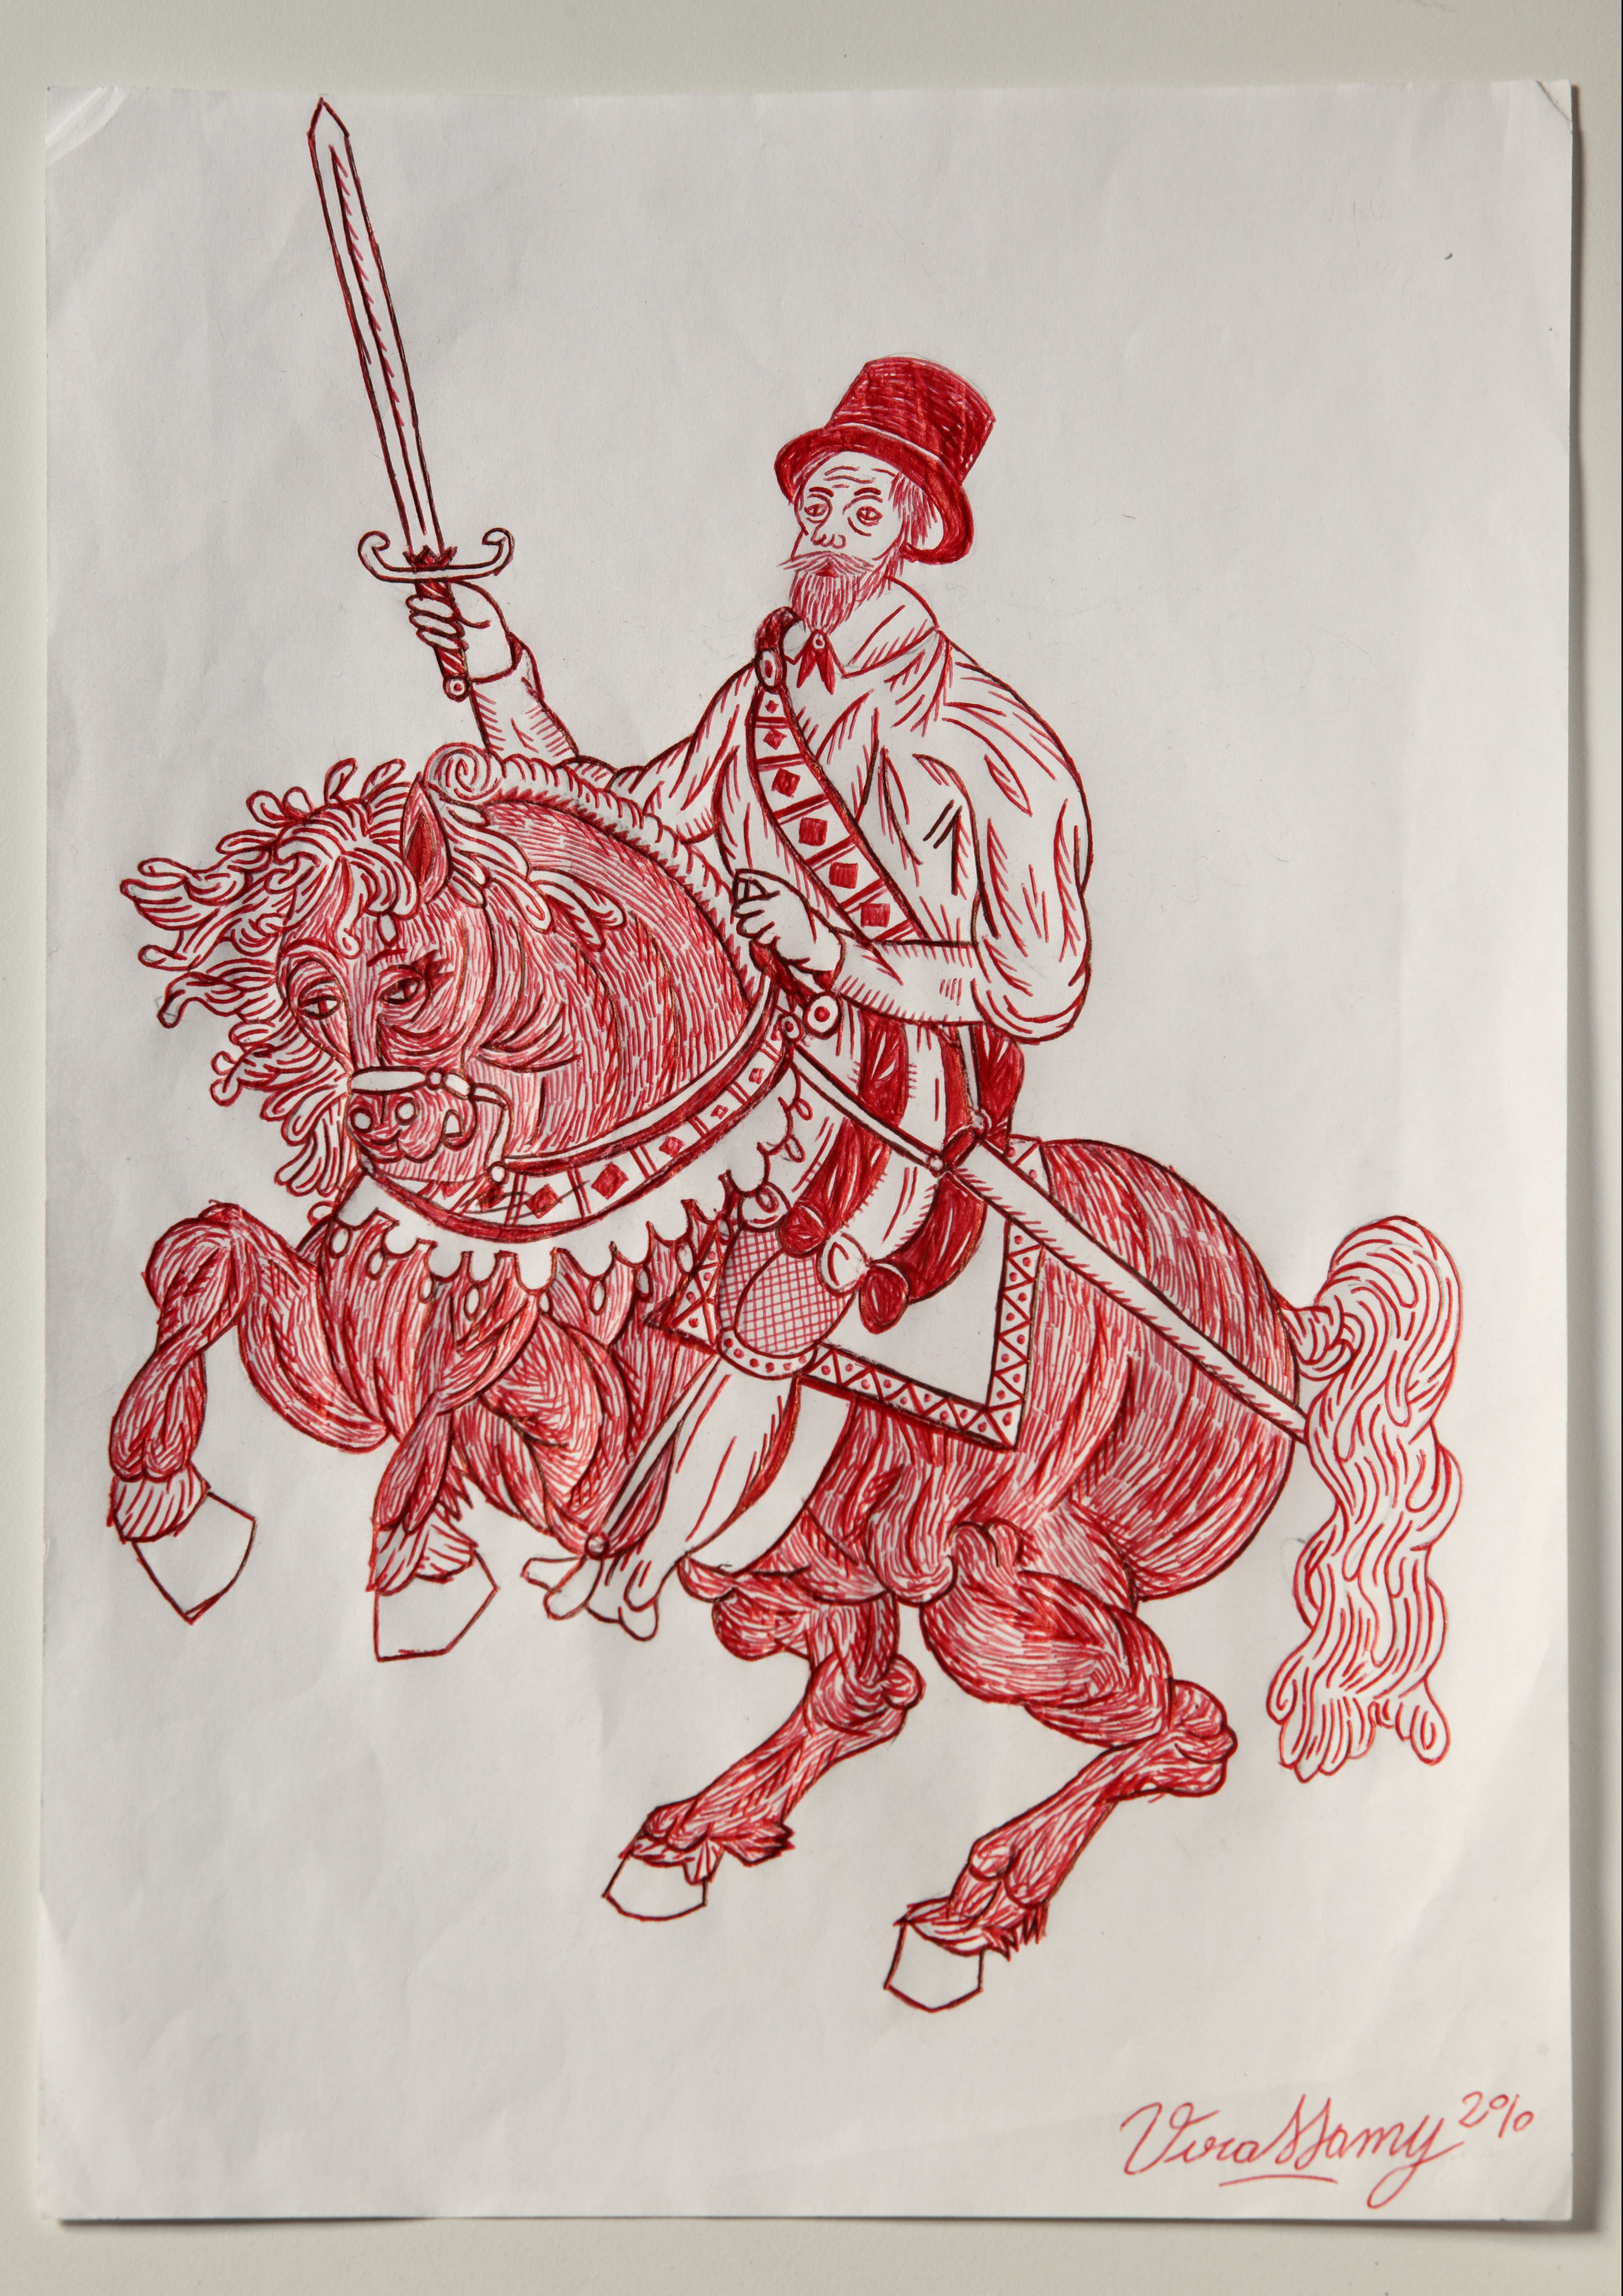 Untitled (4 horsemen drawings)